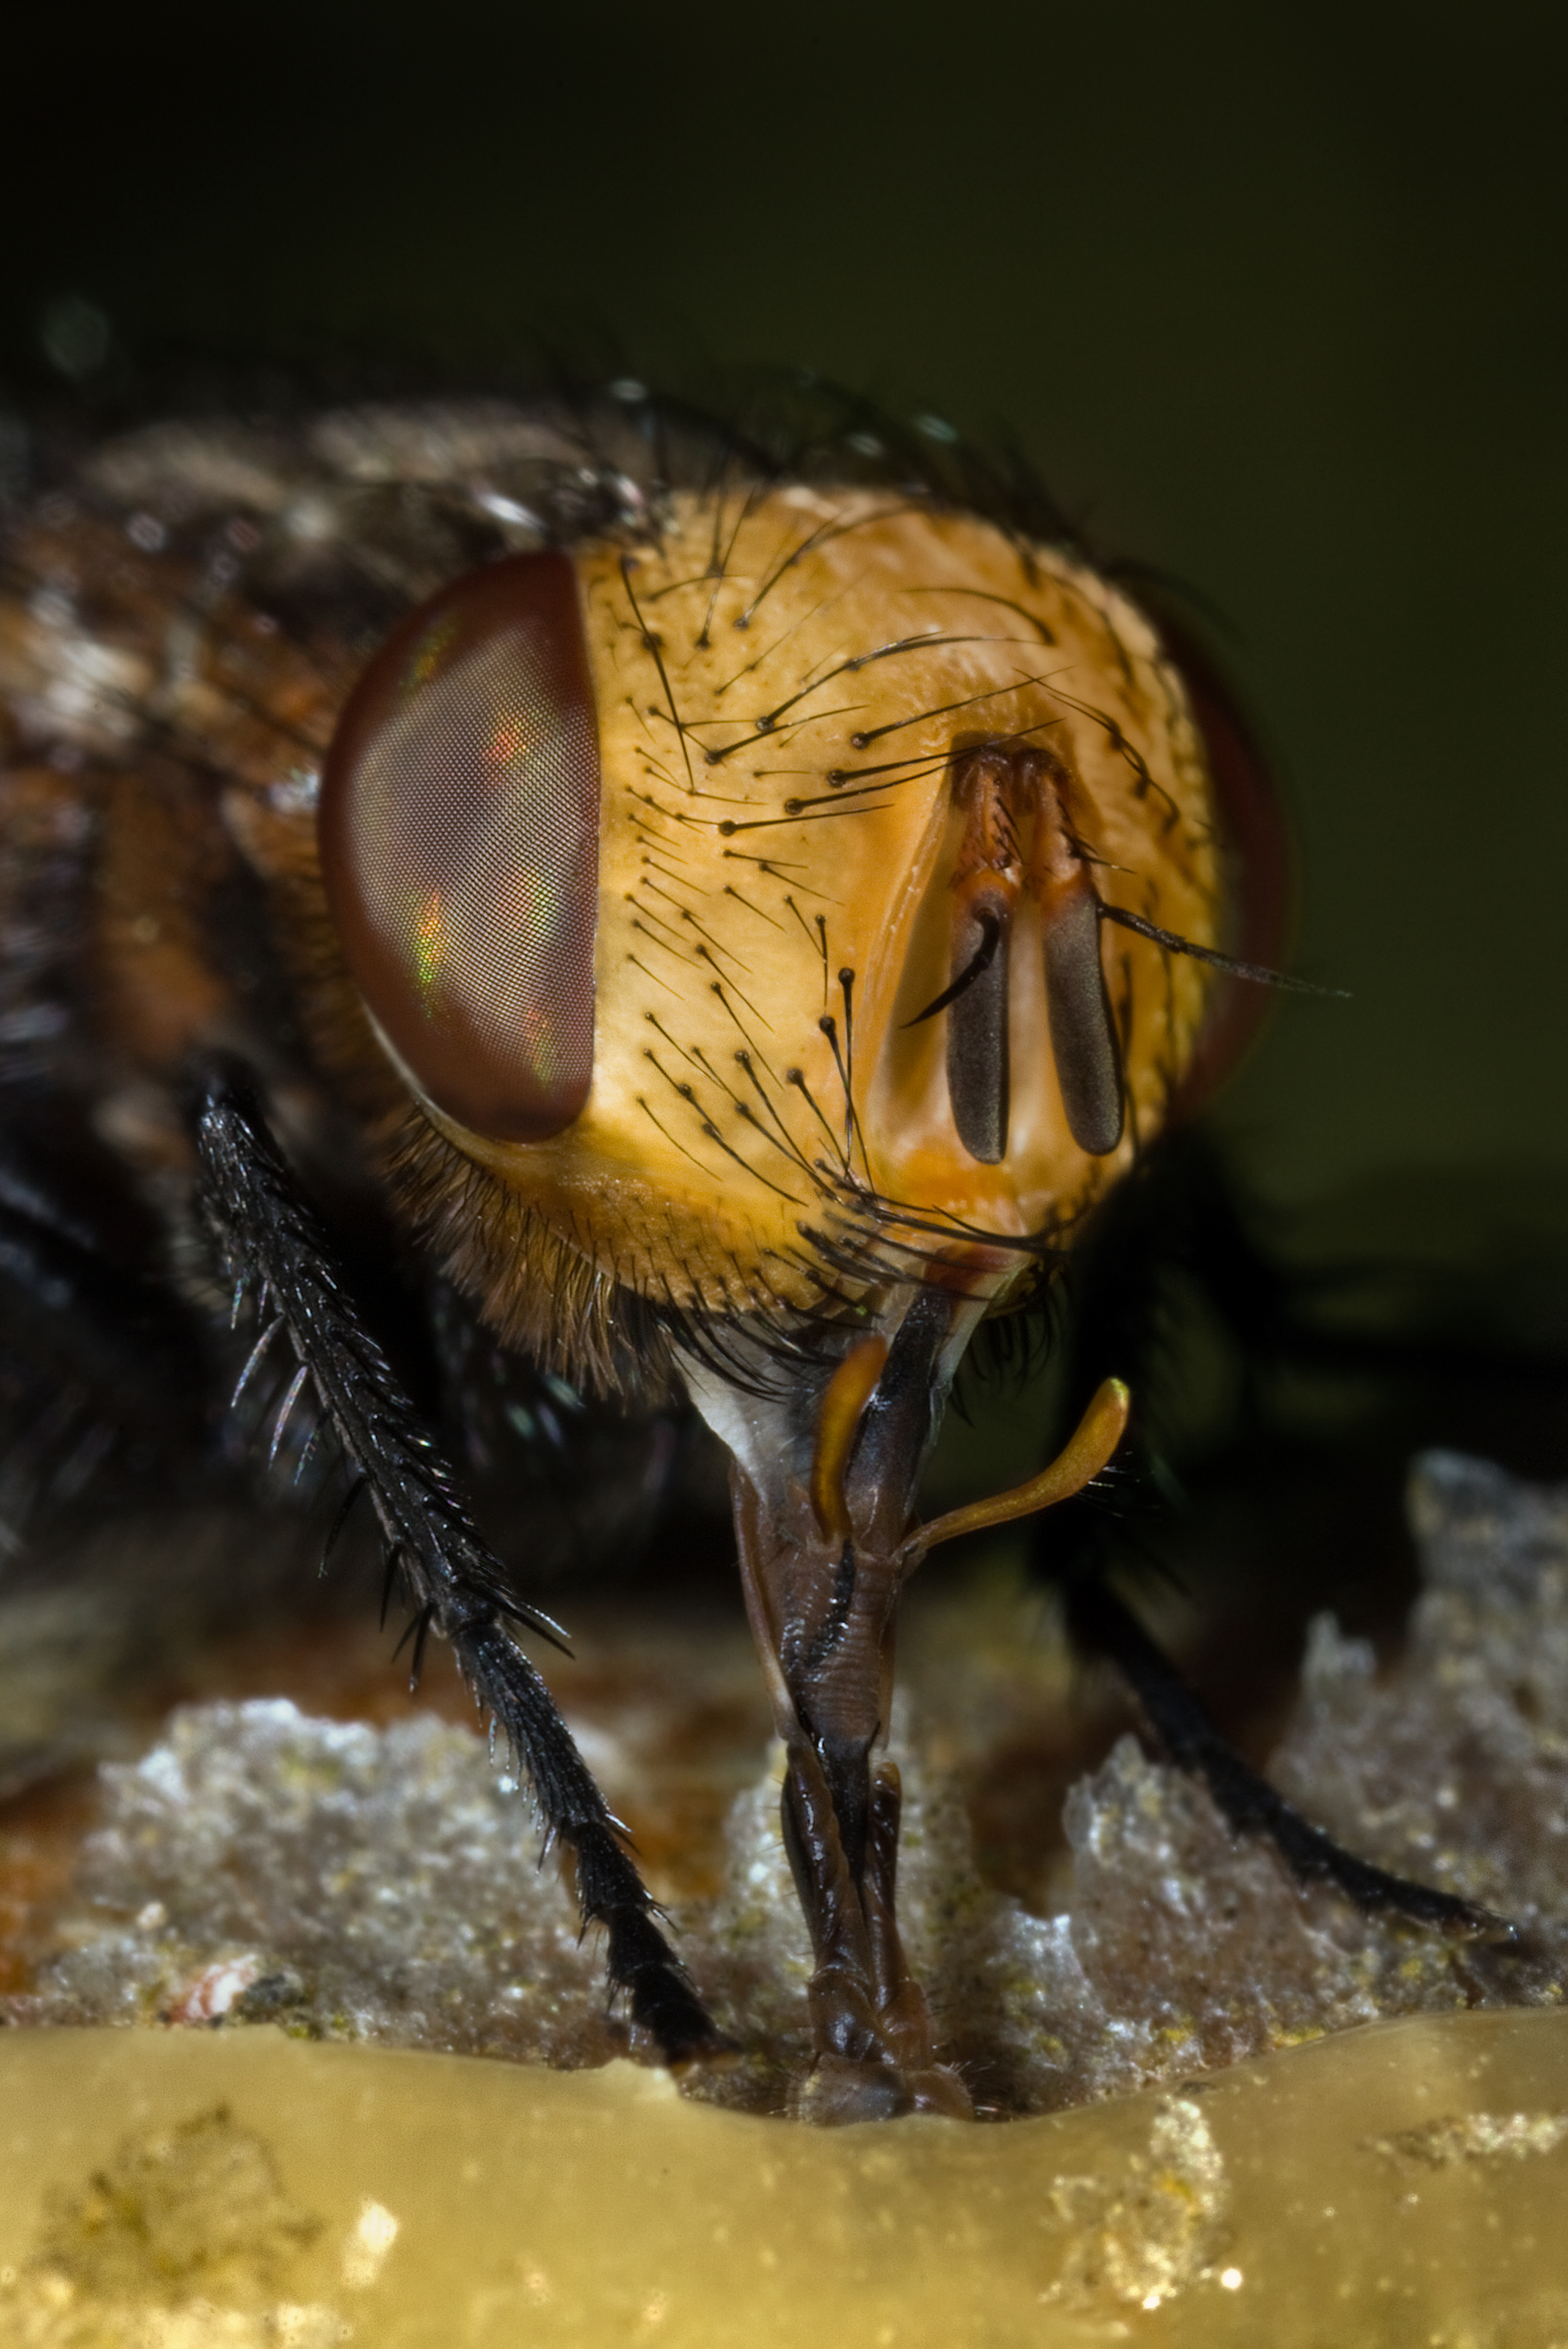 Tachina fly Gonia capitata feeding honey